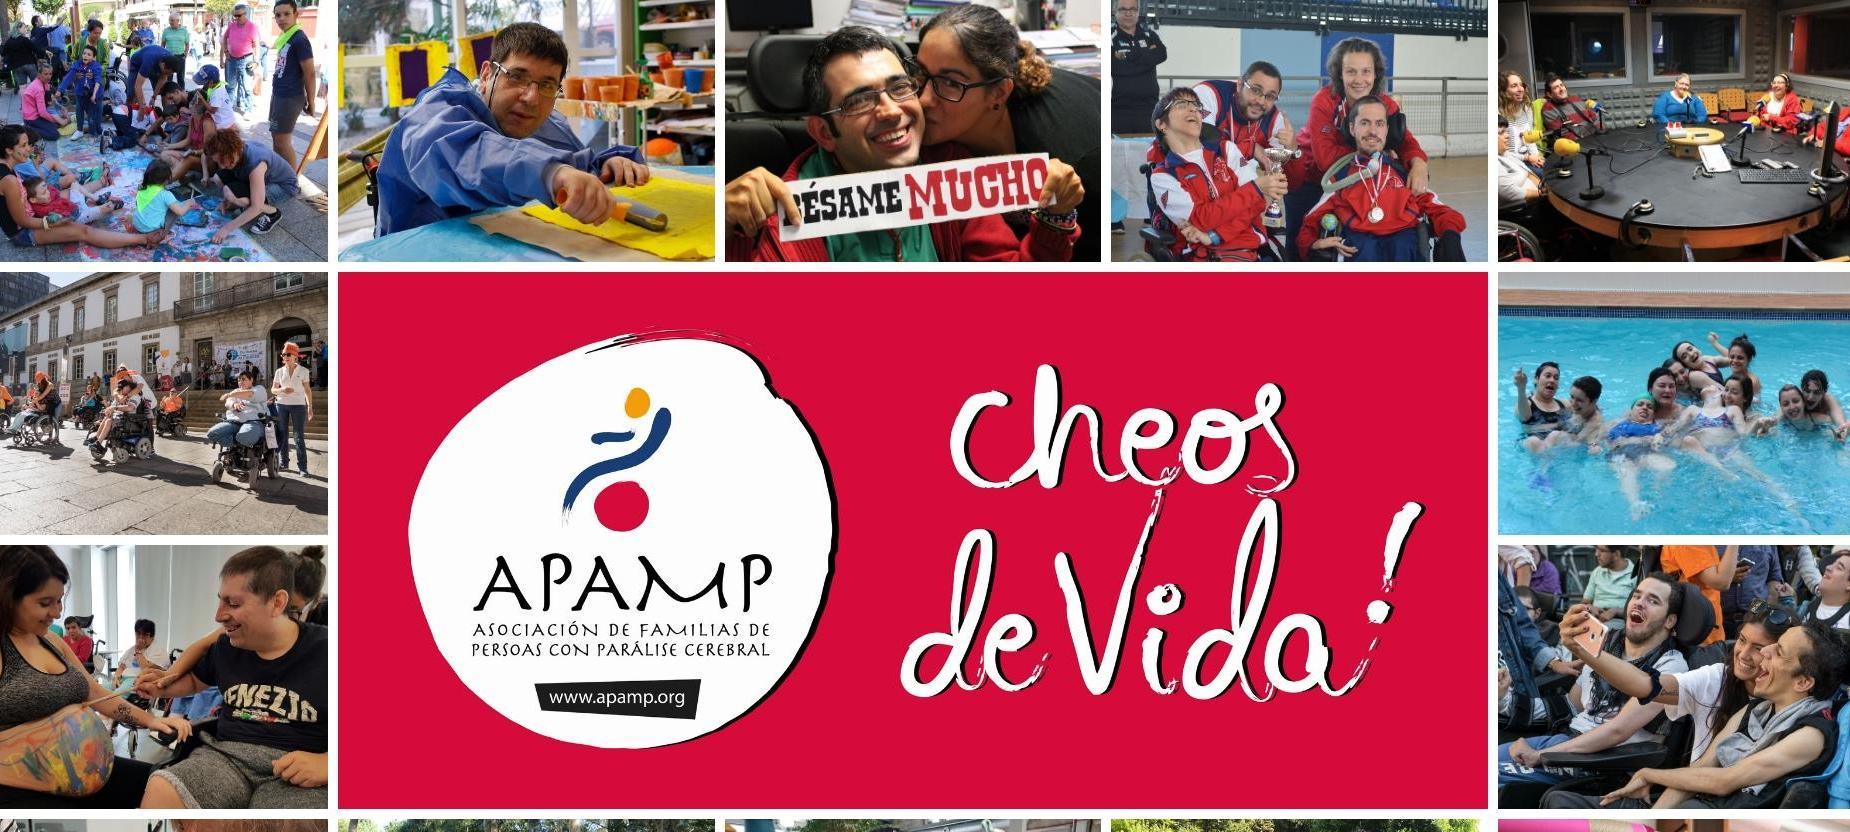 APAMP-Asociación de Familias de Personas con Parálisis Cerebral Profile, rate, communicate and discover